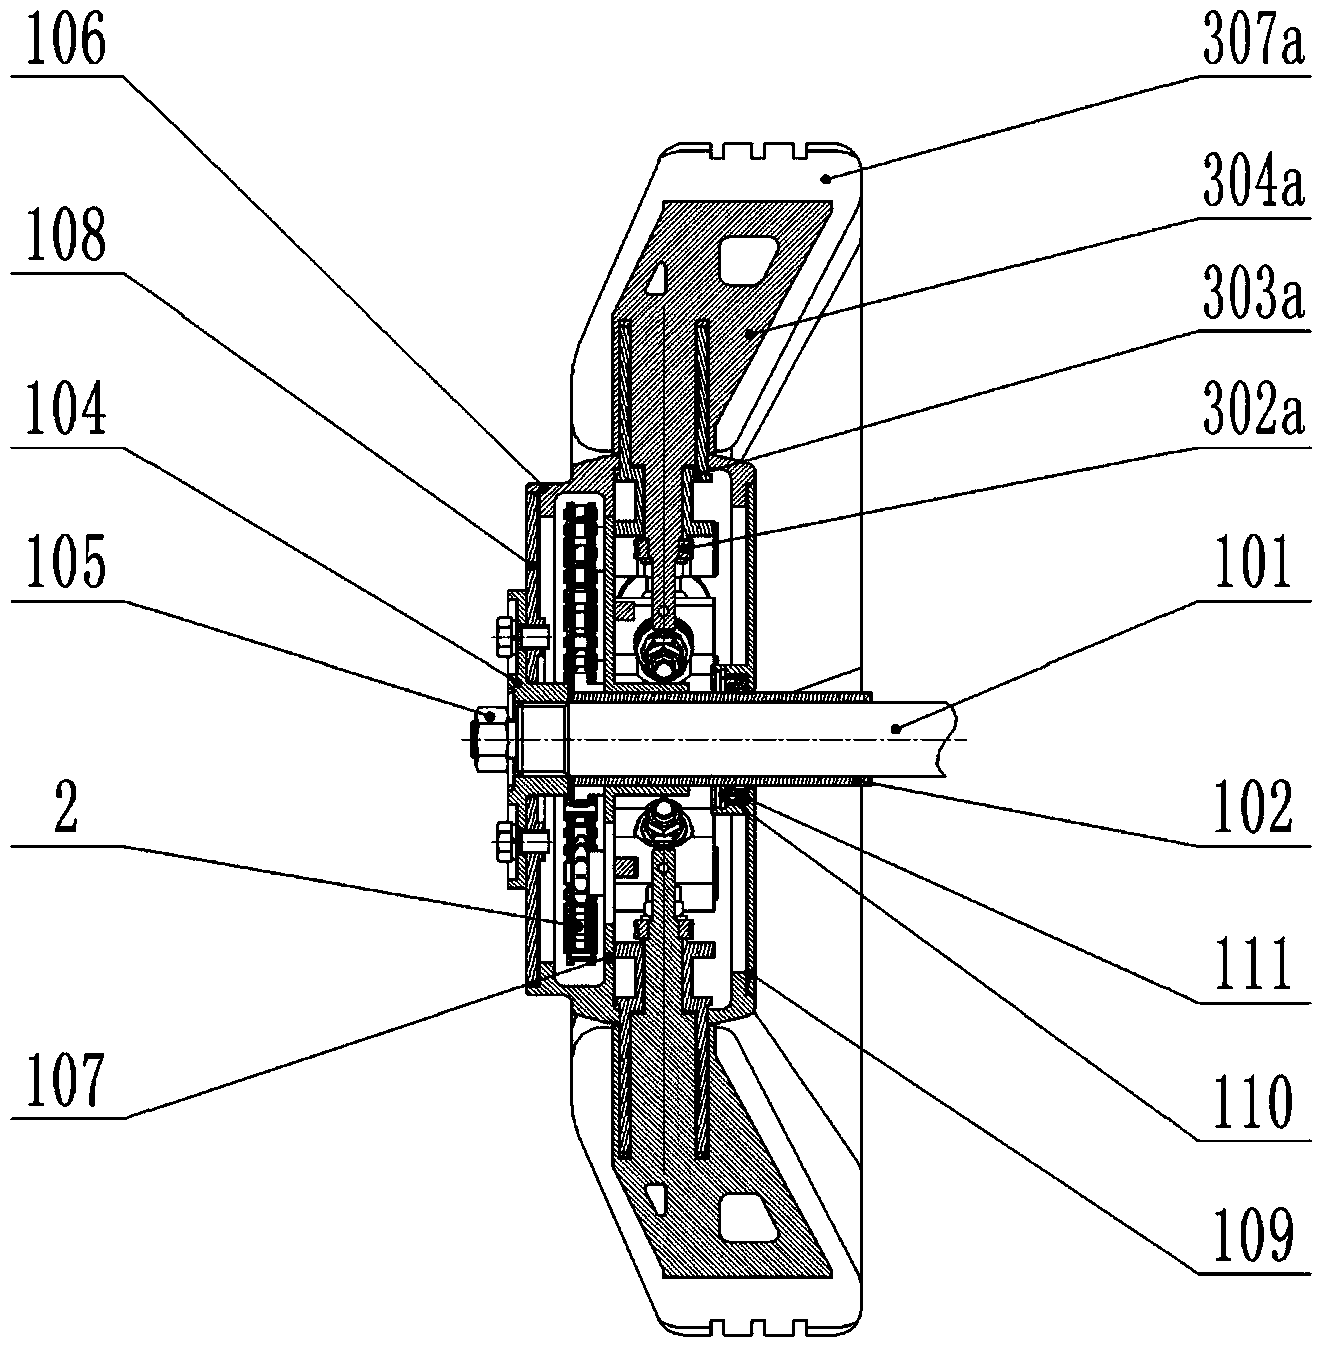 Deformable wheel mechanism